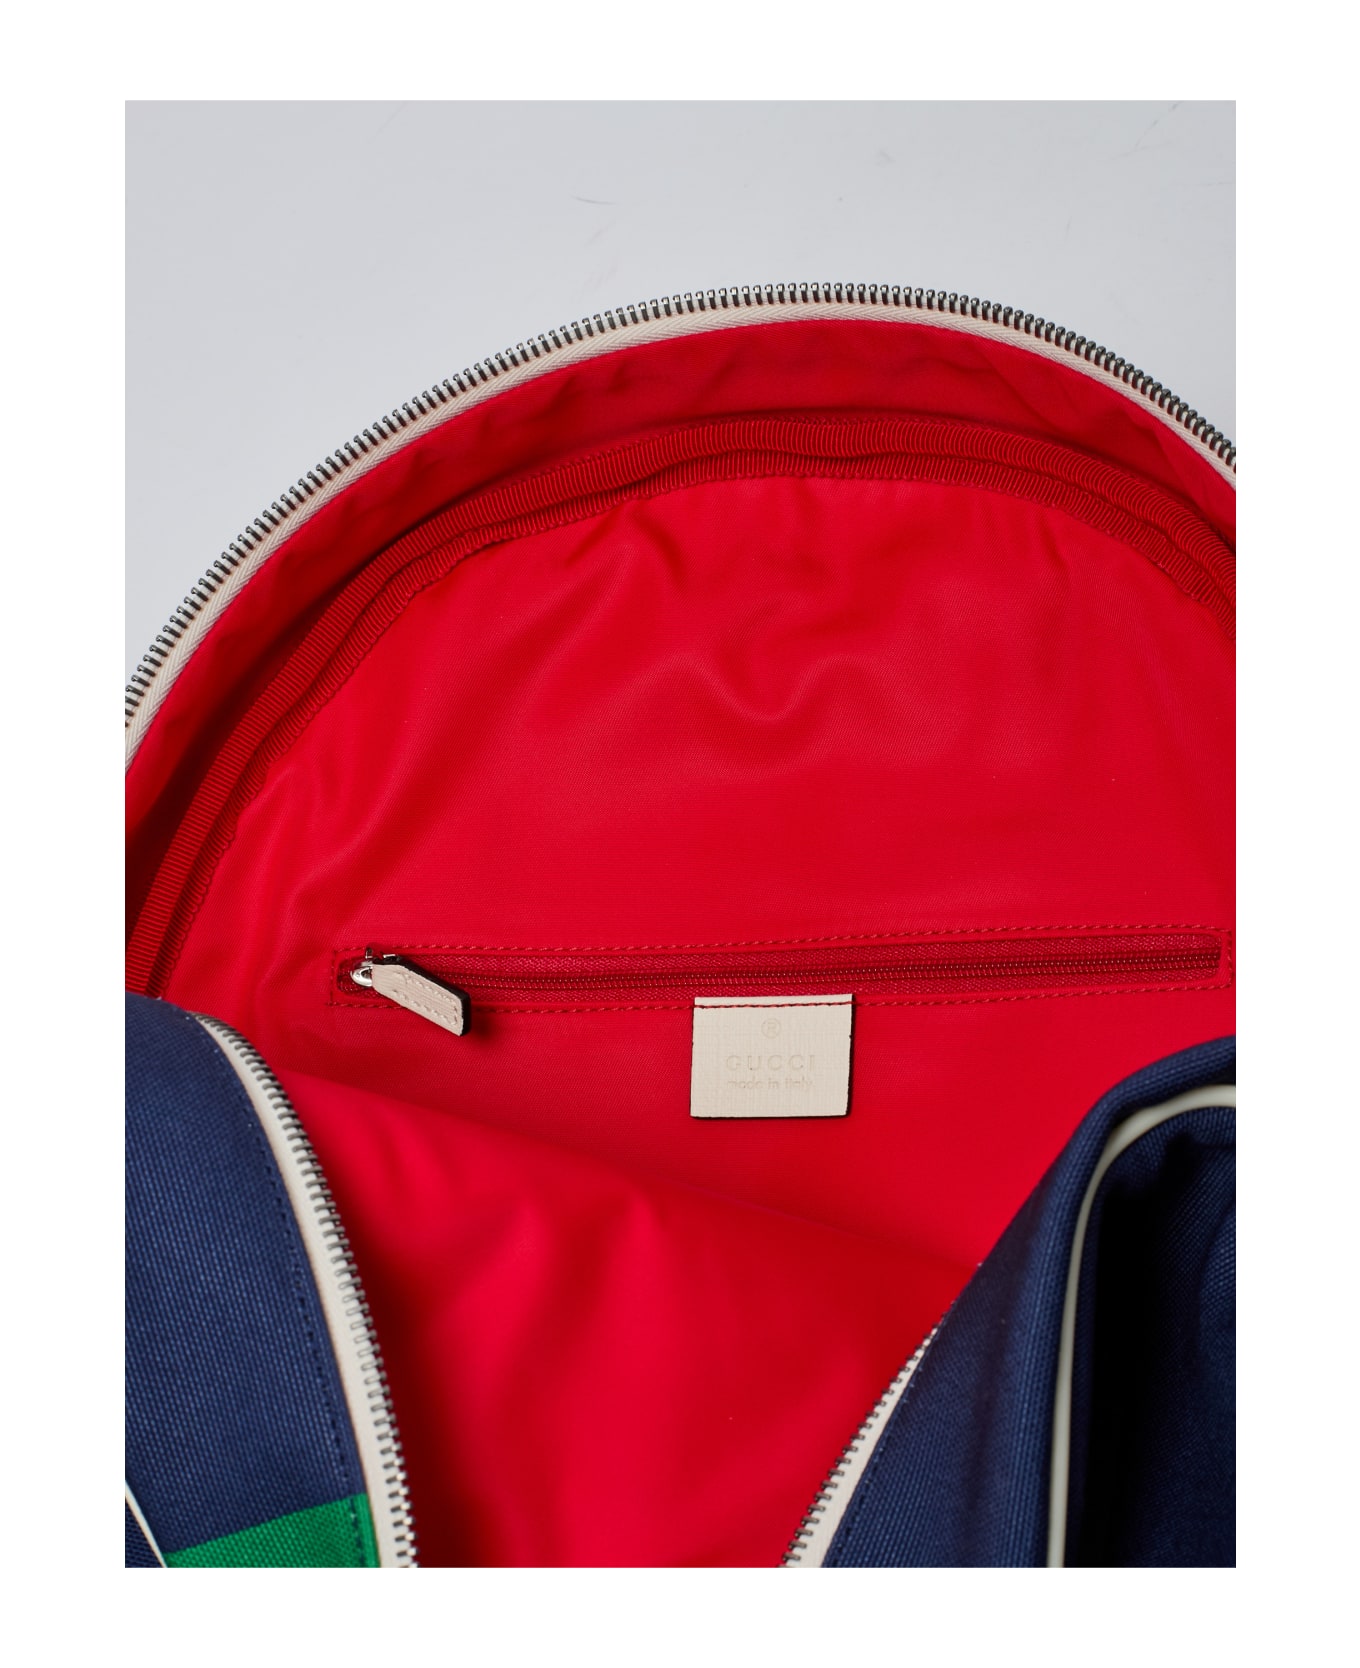 Gucci Backpack Backpack - BLU-VERDE-ROSSO